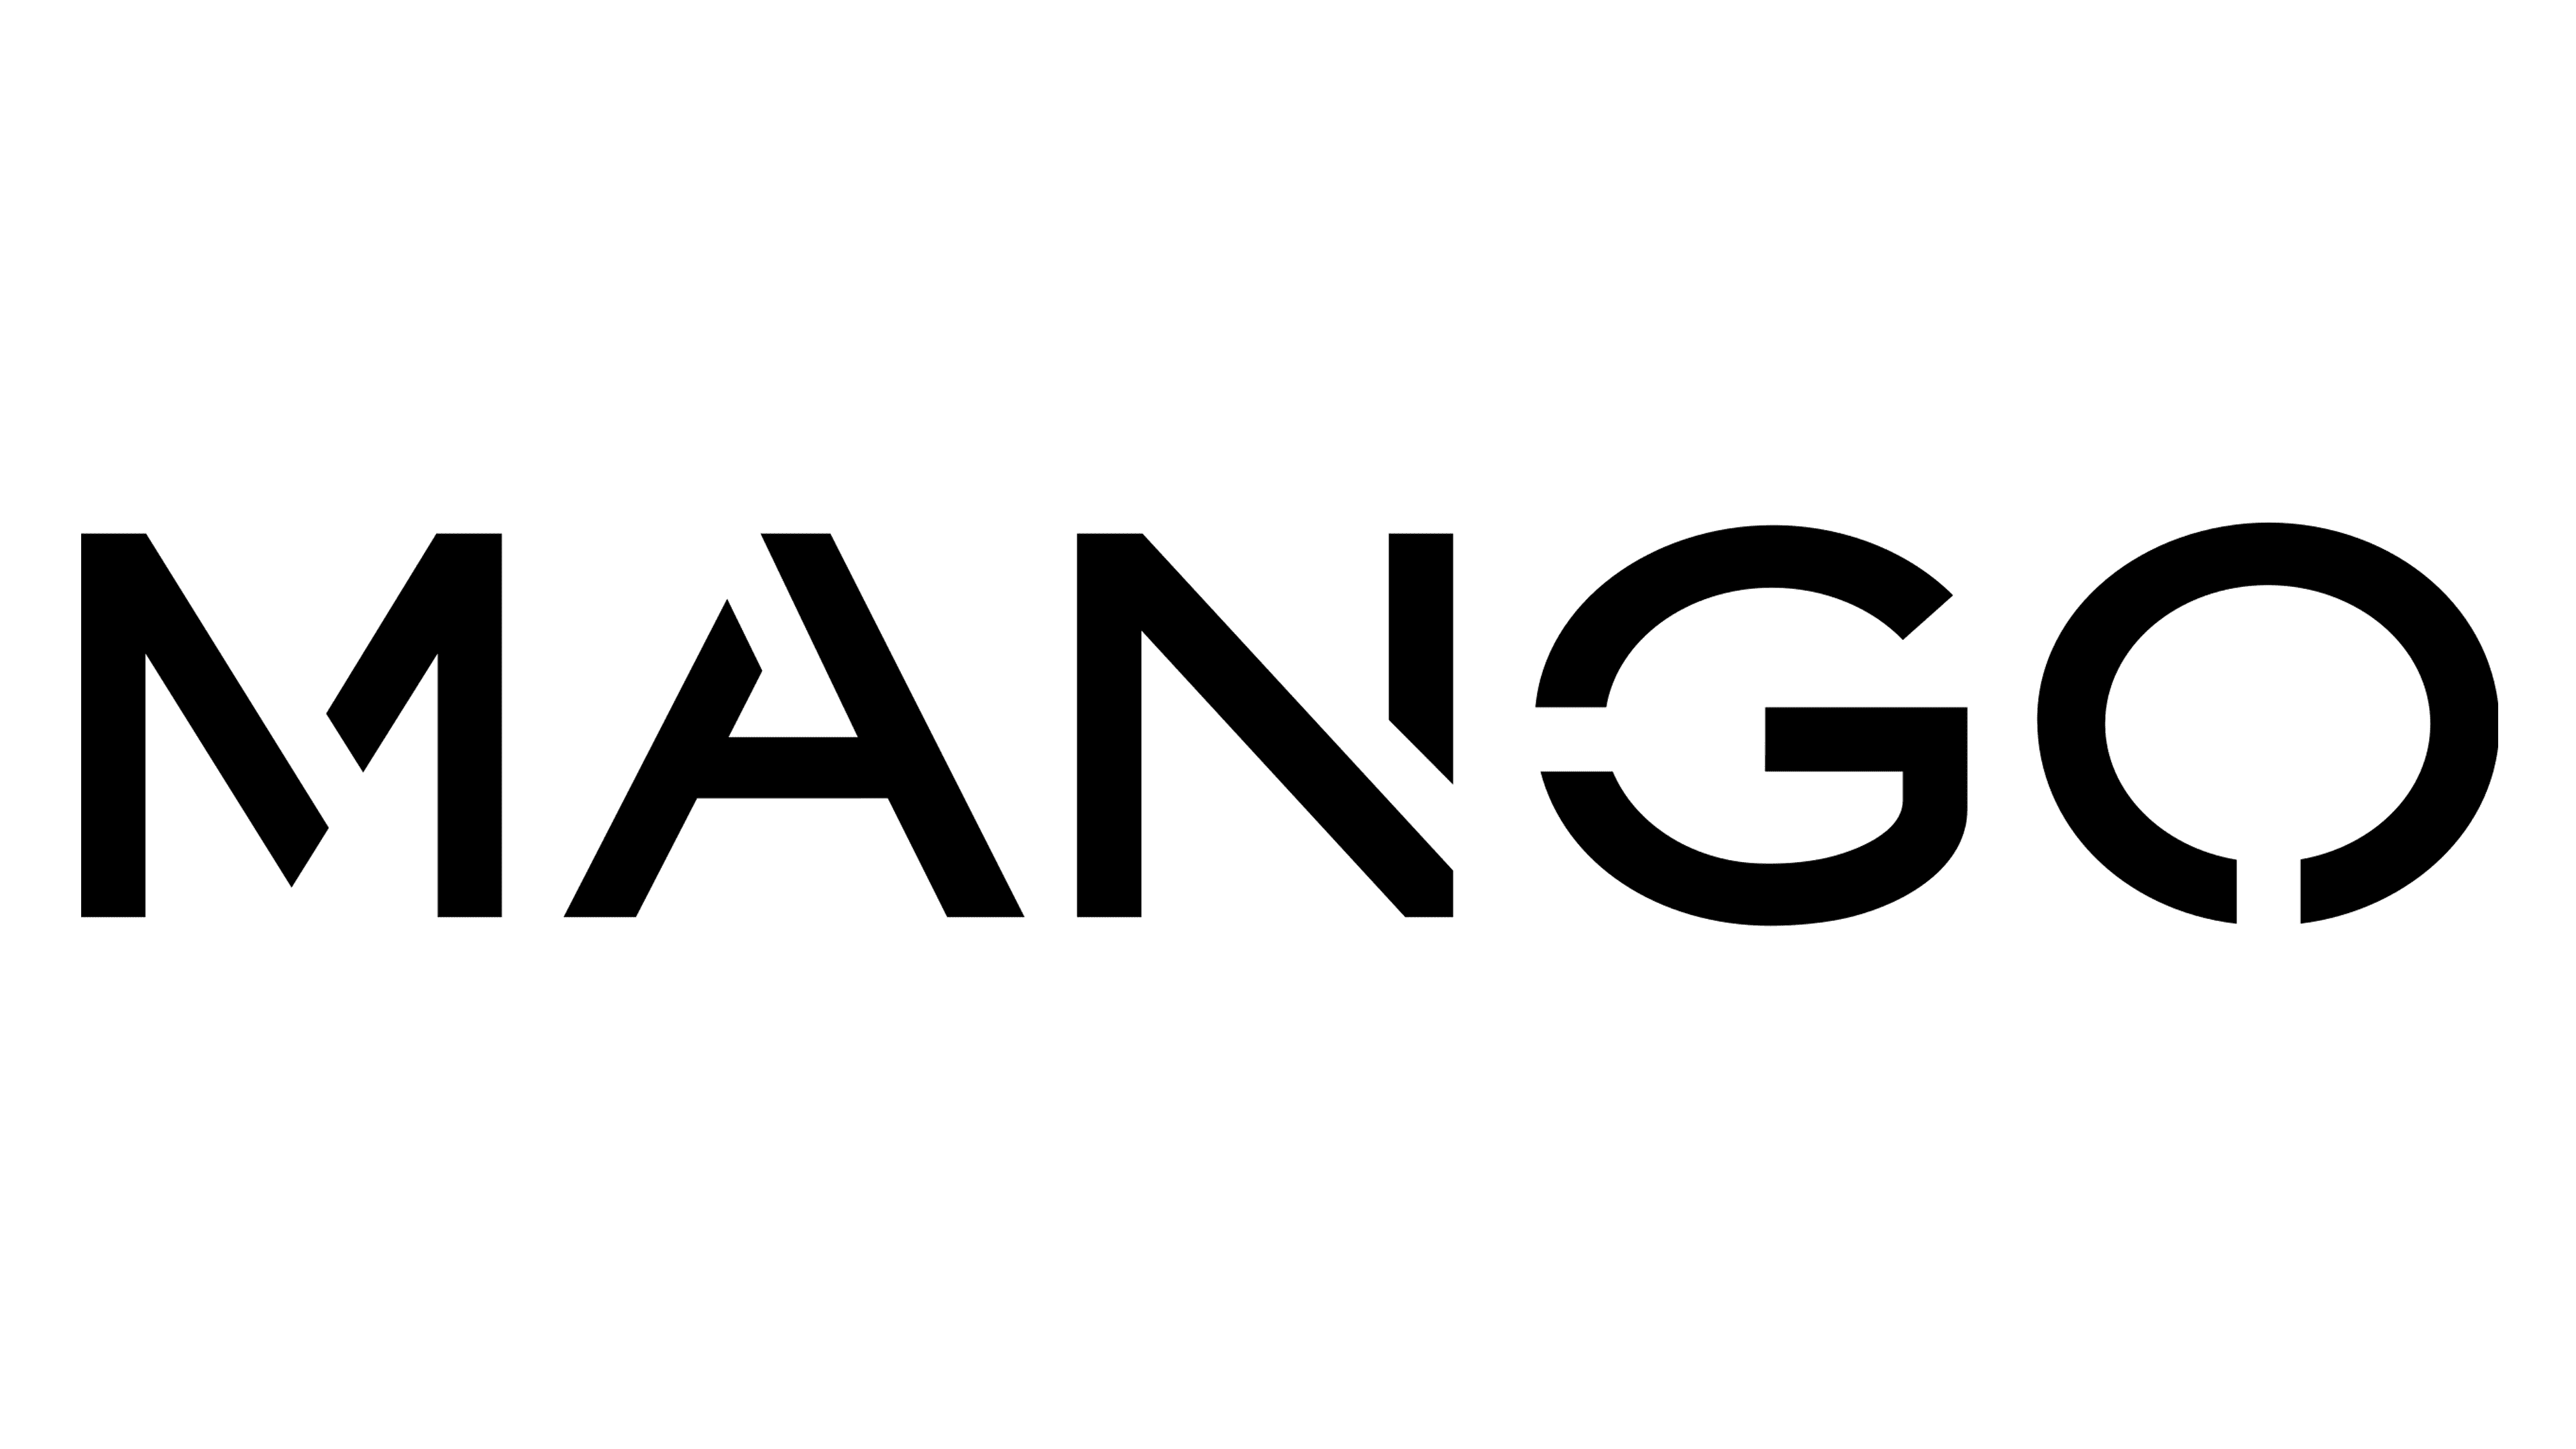 723 Mango Logo Text Images, Stock Photos, 3D objects, & Vectors |  Shutterstock